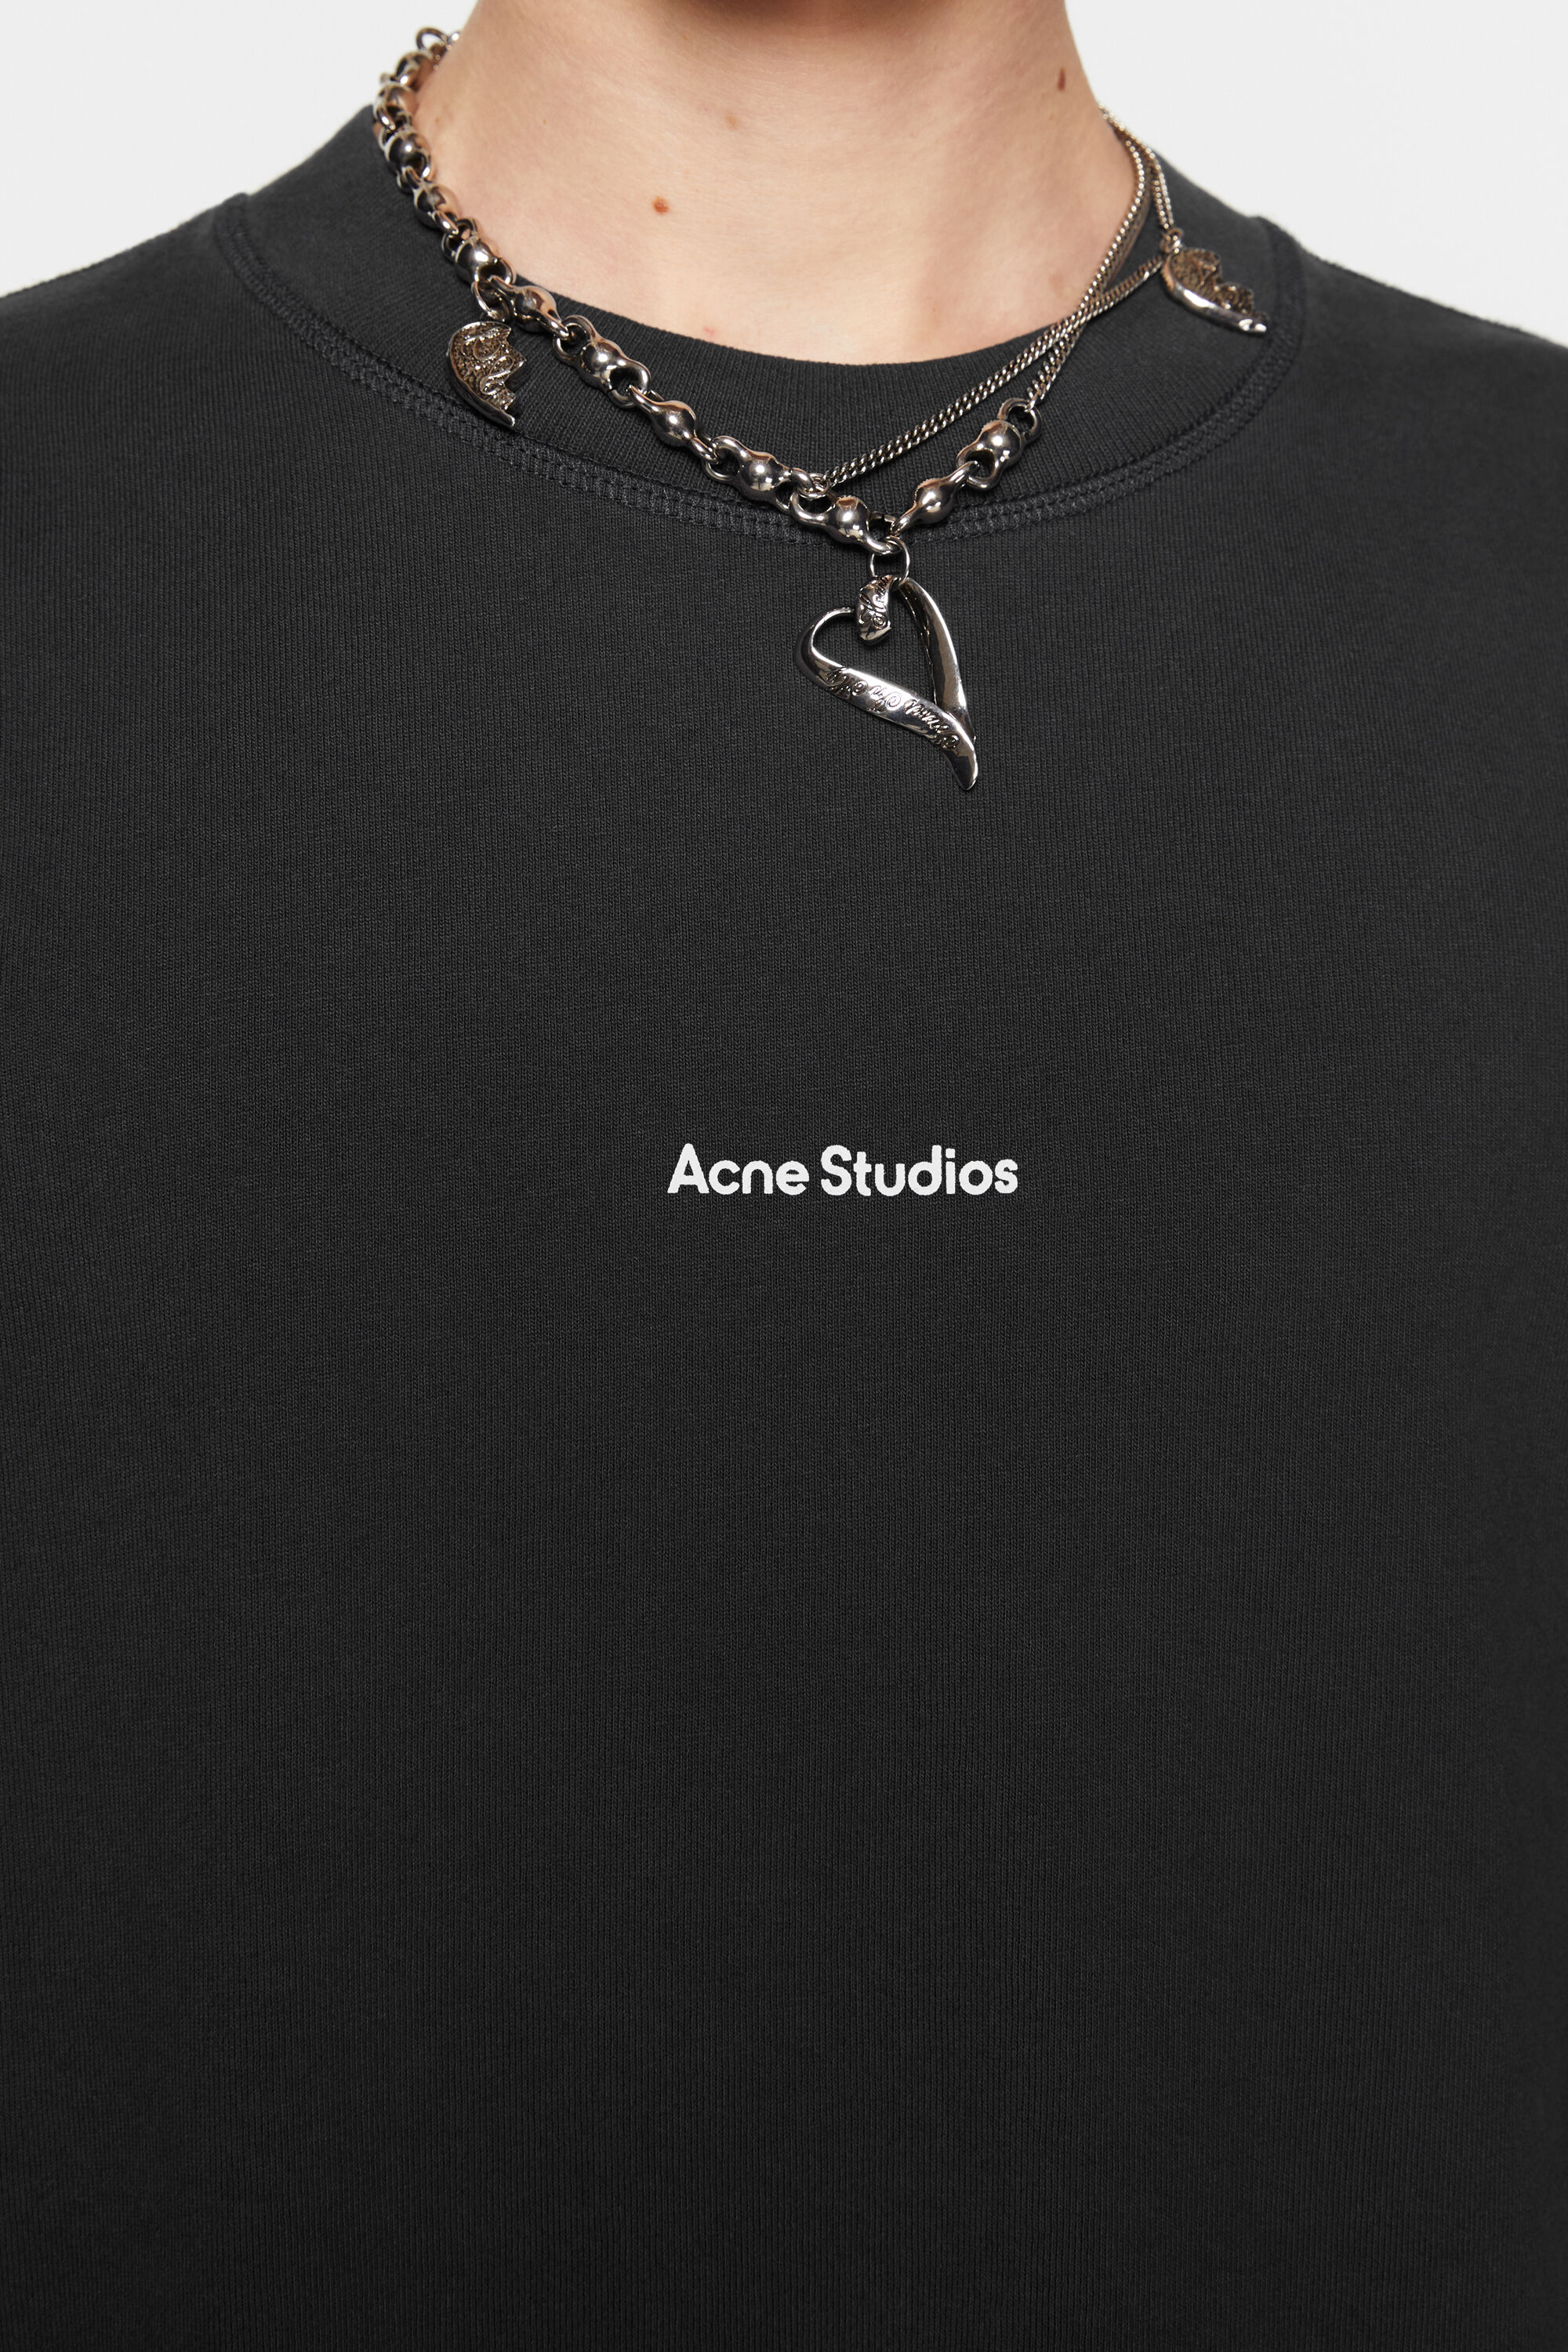 Acne Studios - ロゴ ロングスリーブTシャツ - ブラック